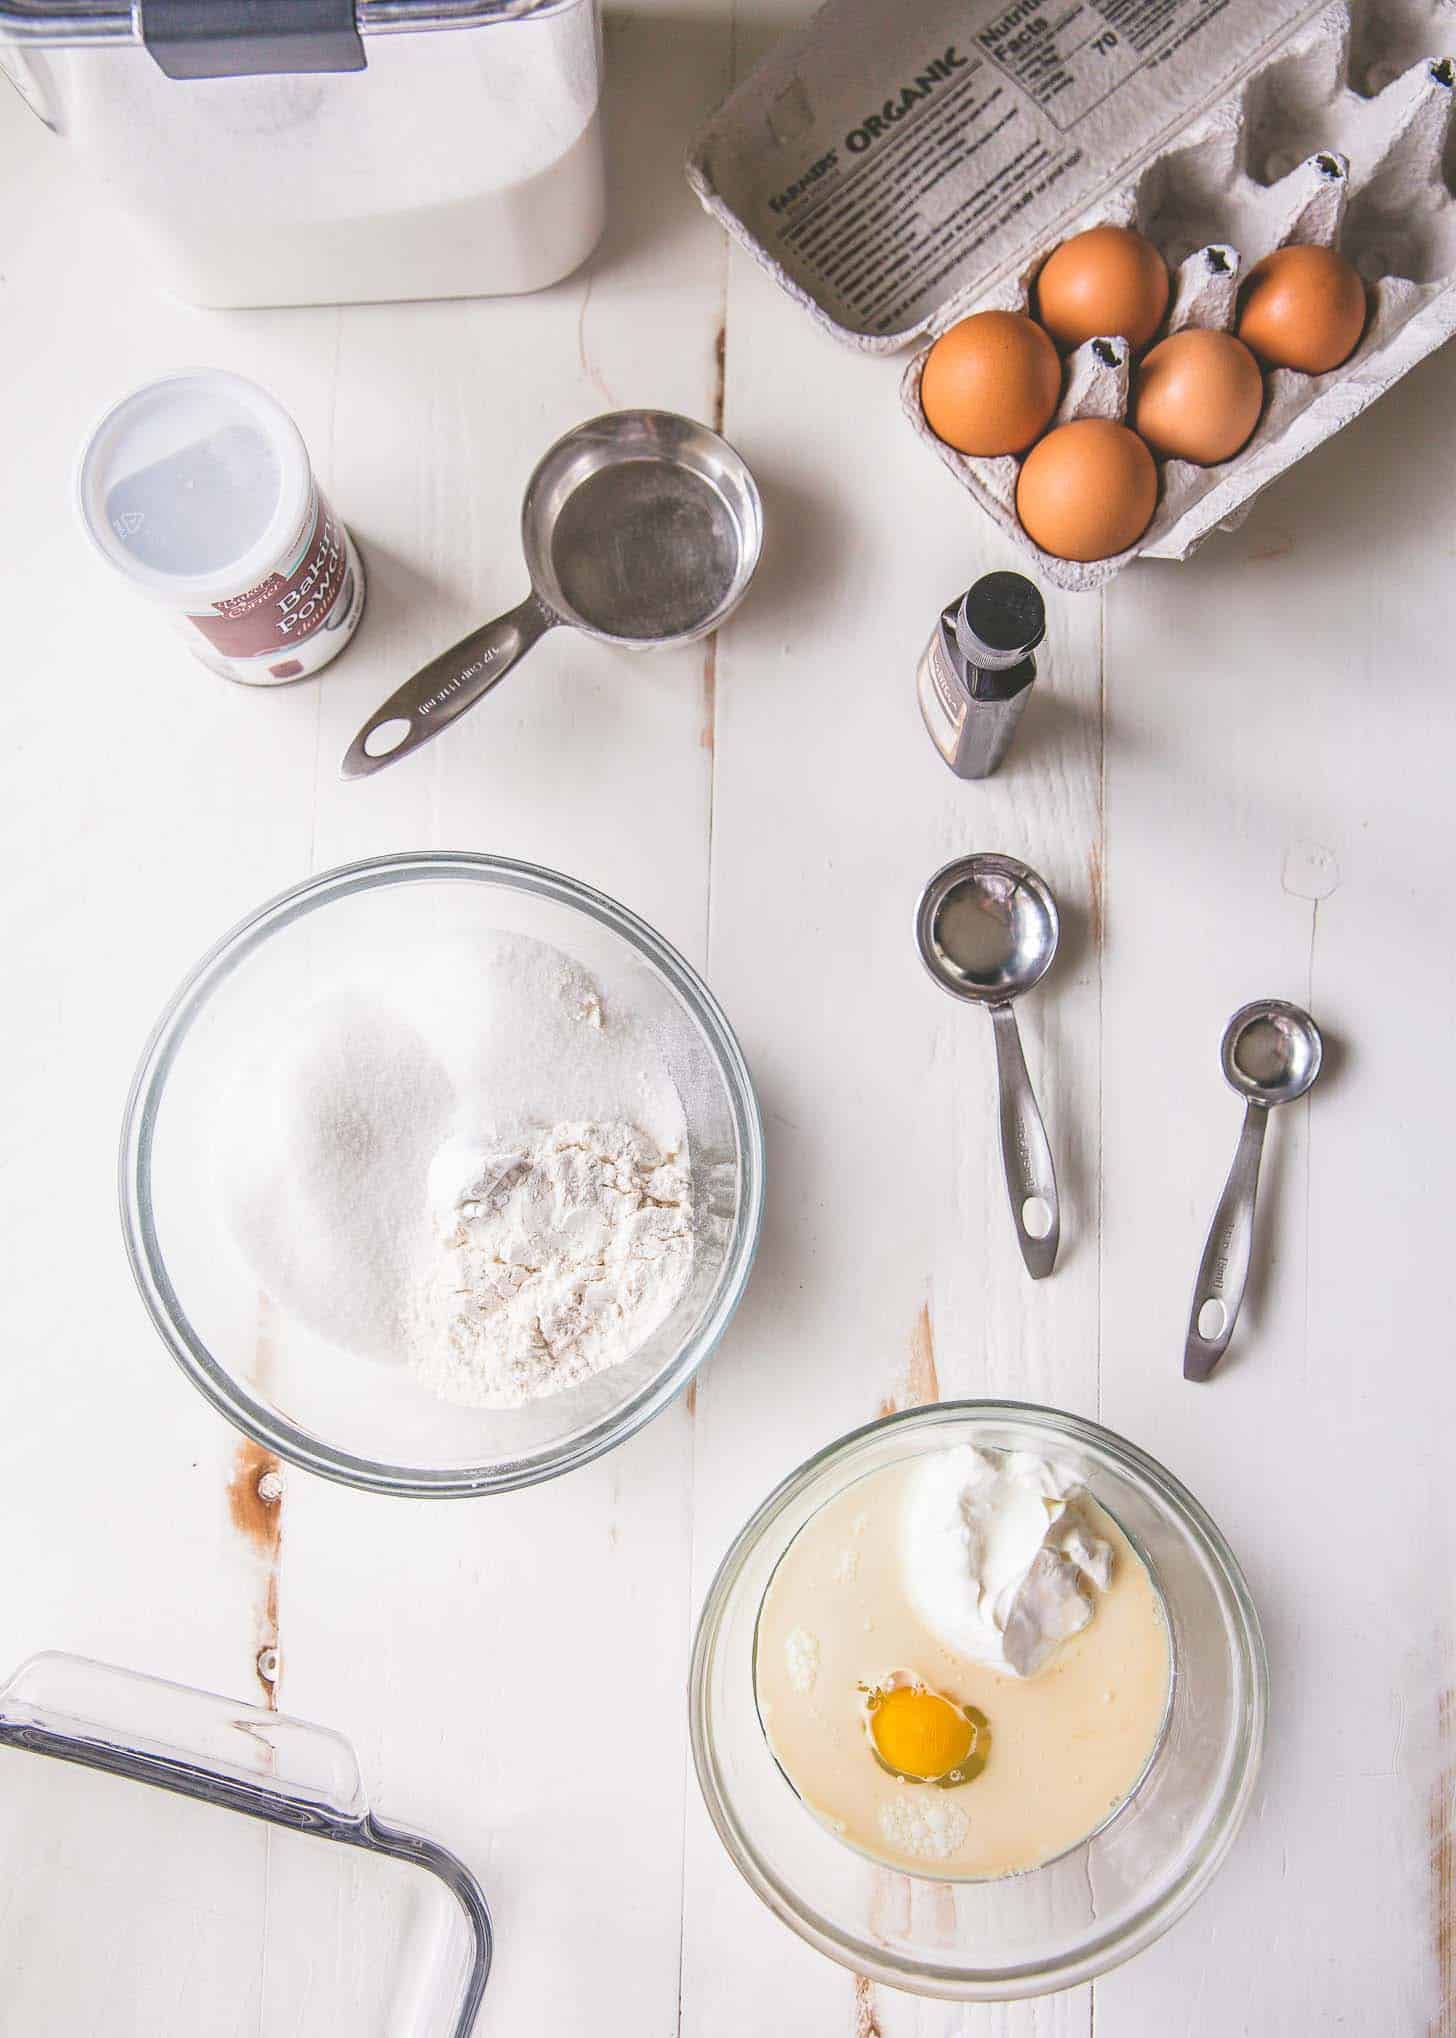 eggs, sugar, flour, vanilla, baking powder and measuring spoons on a white table